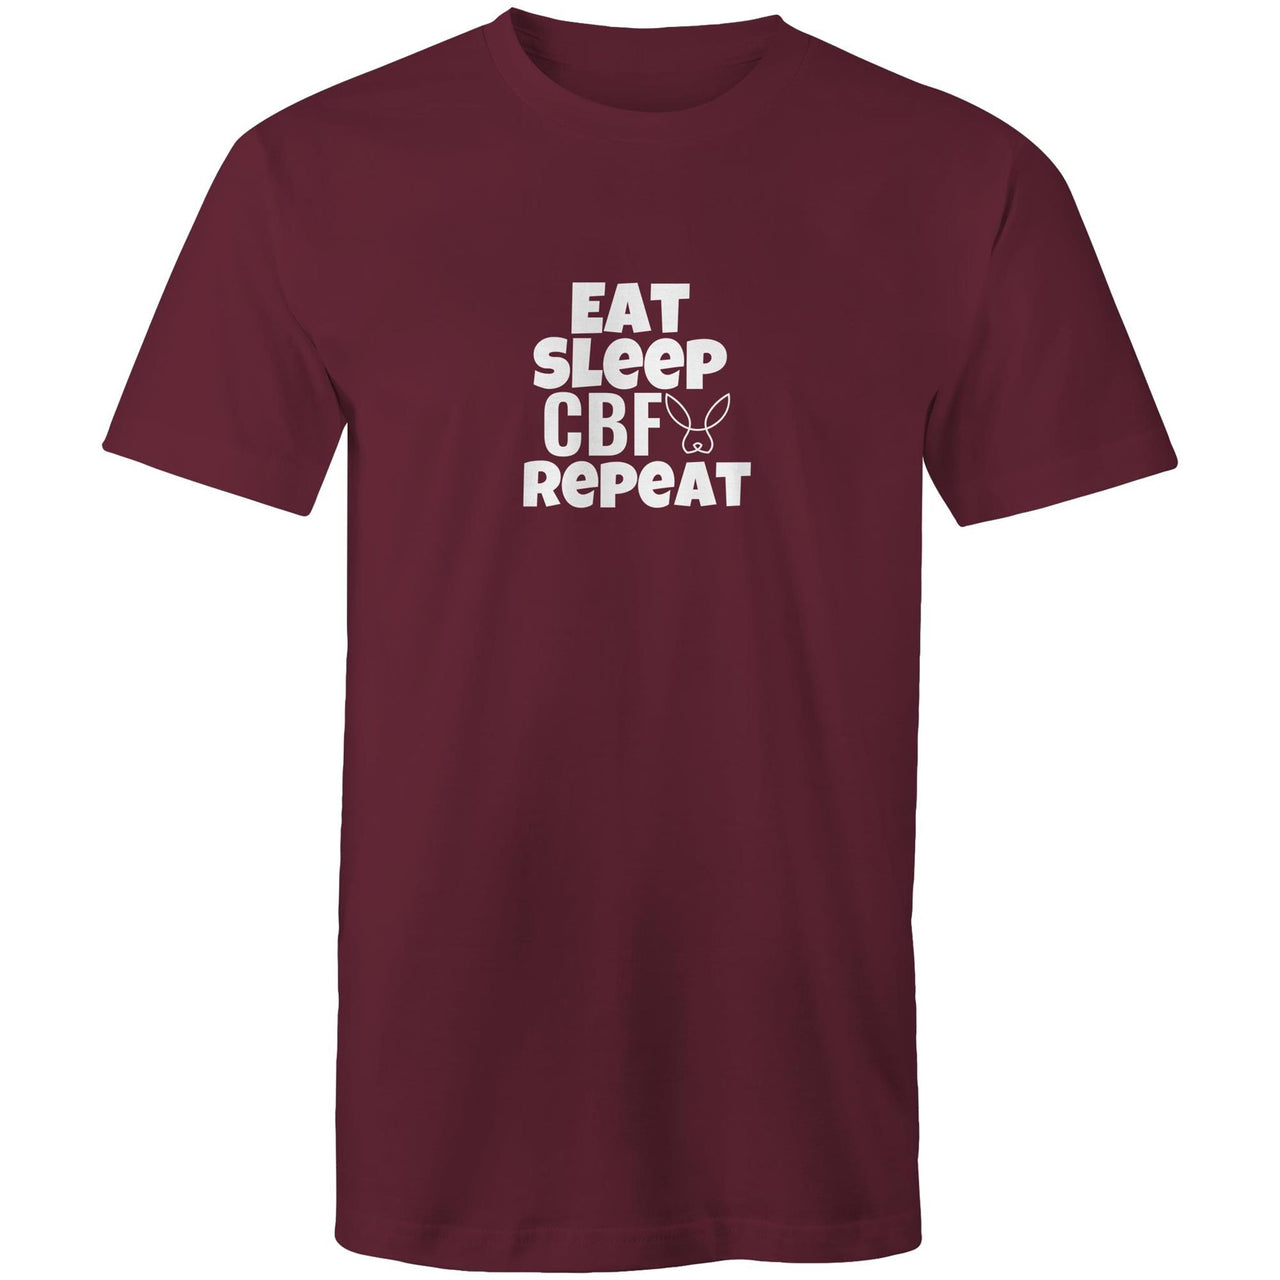 Eat Sleep CBF Repeat Crew Burgundy T-Shirt by CBF Clothing